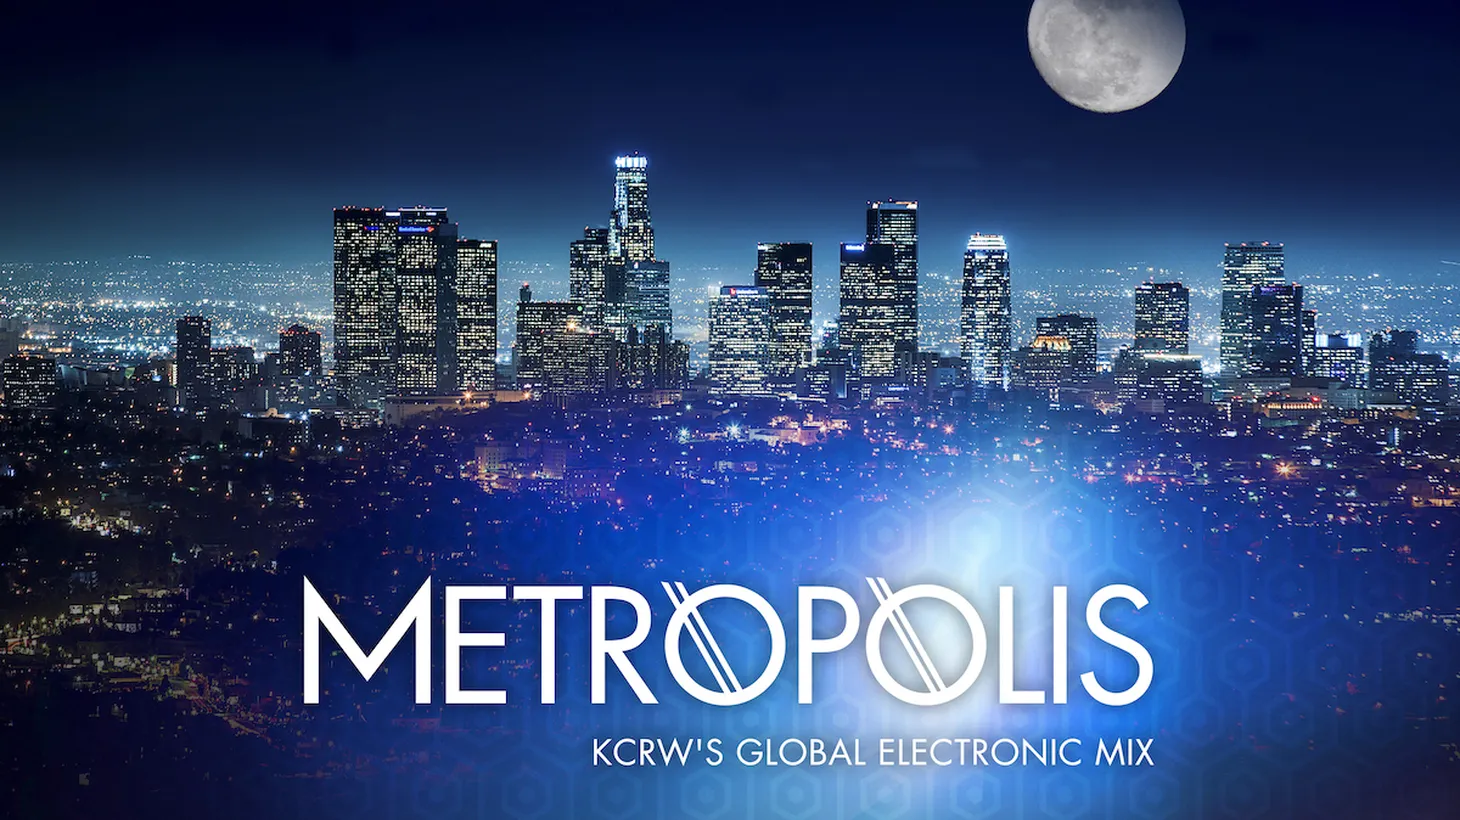 Metropolis playlist, November 27, 2021.